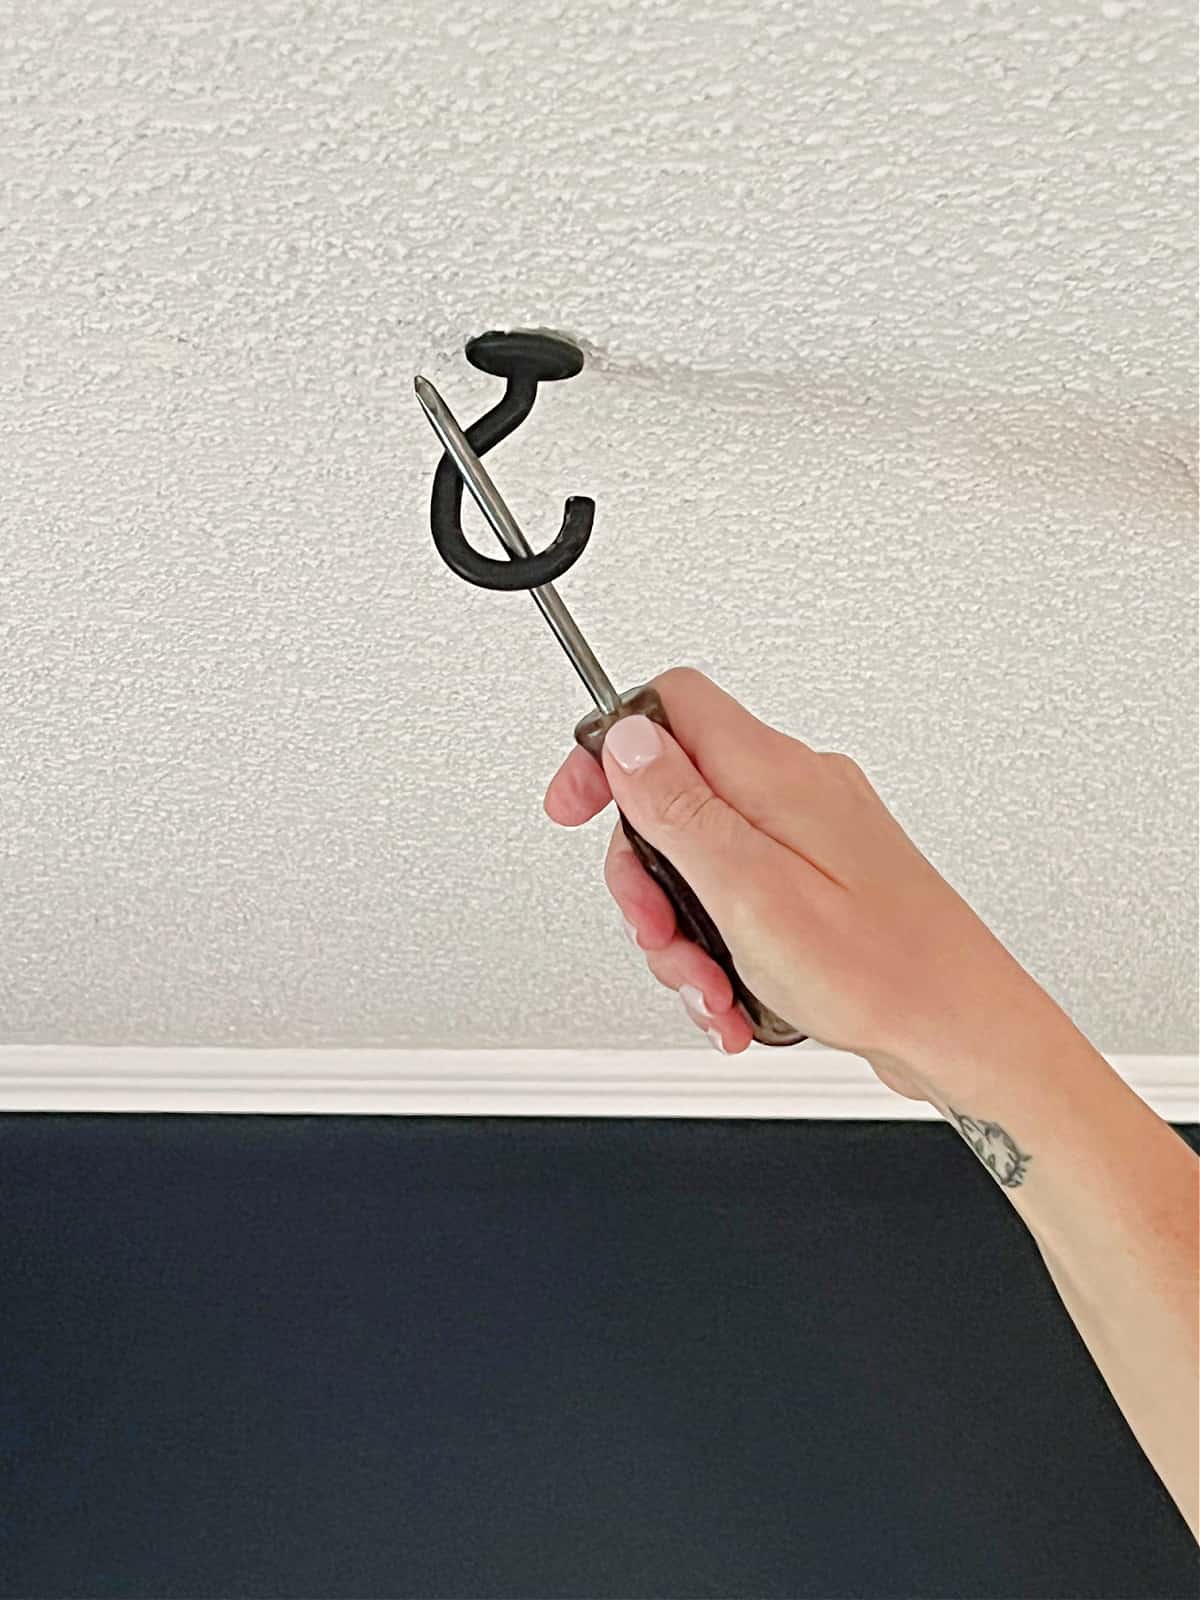 using a screwdriver to tighten ceiling light hook